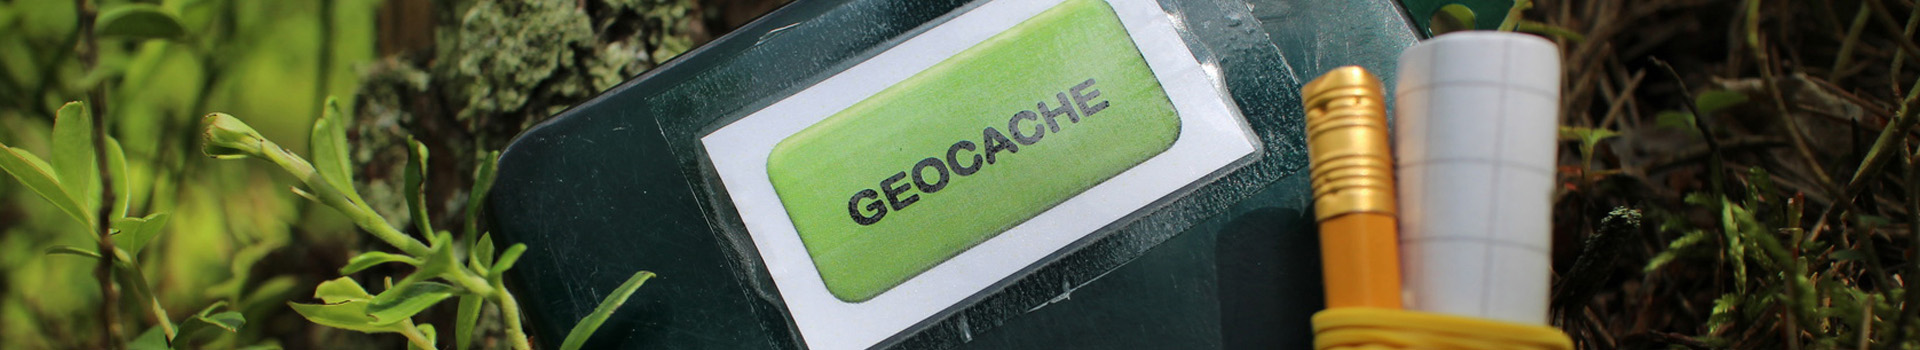 GPS-Geocaching